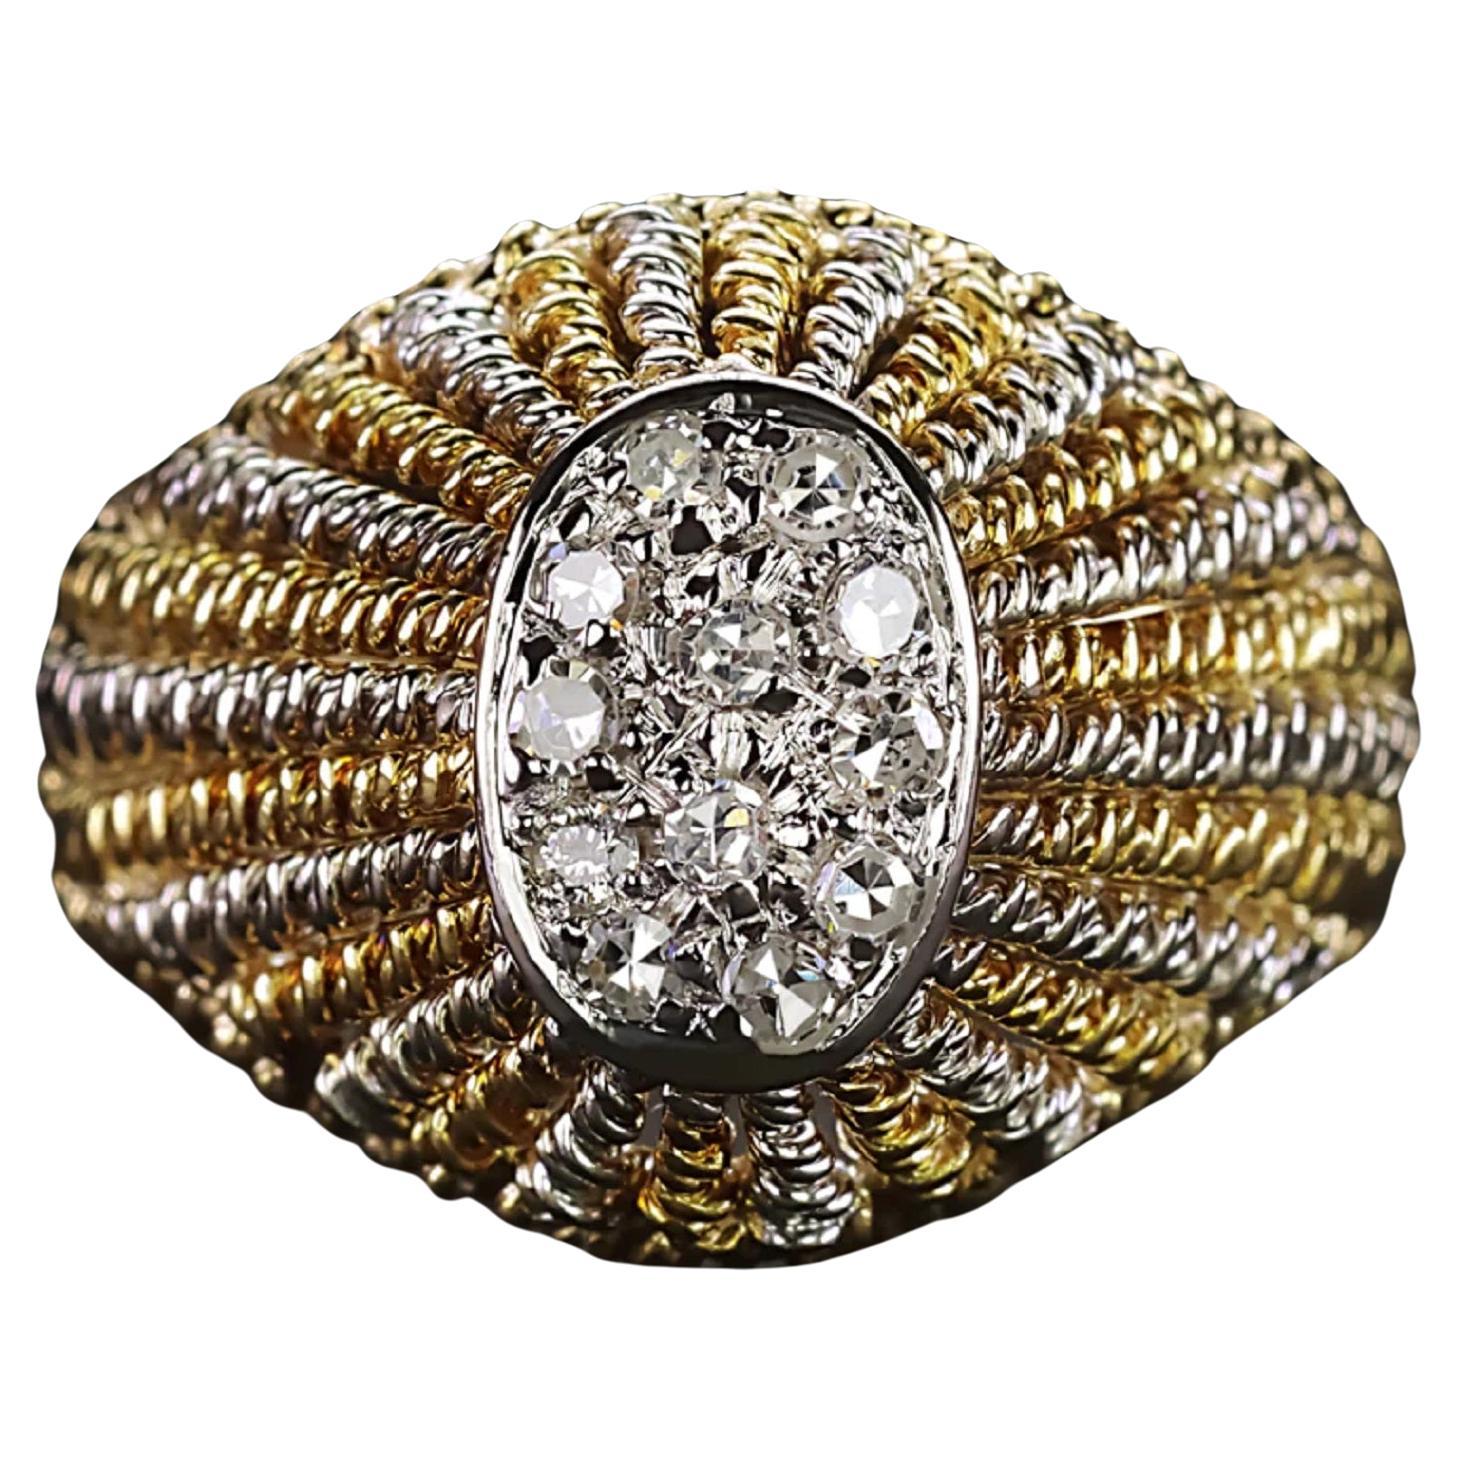 Authentic Vintage Diamond Cocktail Ring